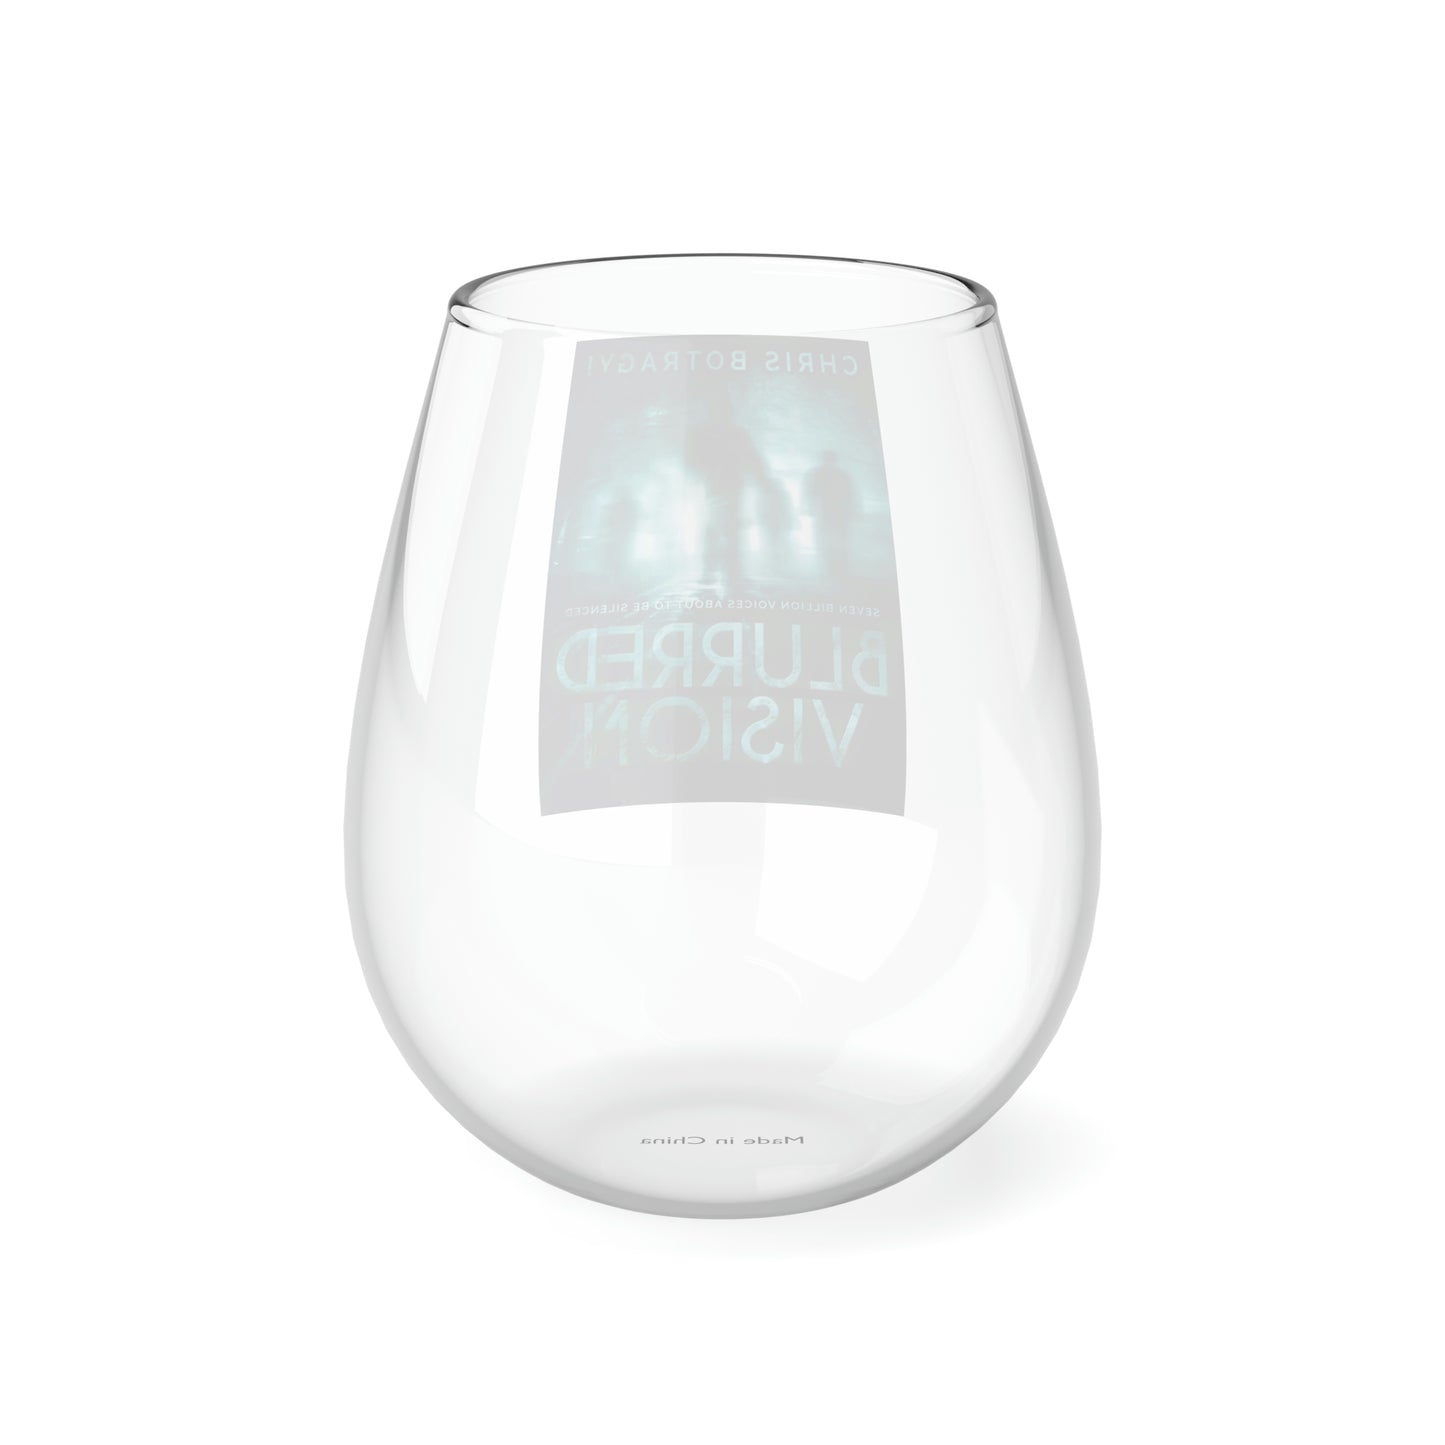 Blurred Vision - Stemless Wine Glass, 11.75oz